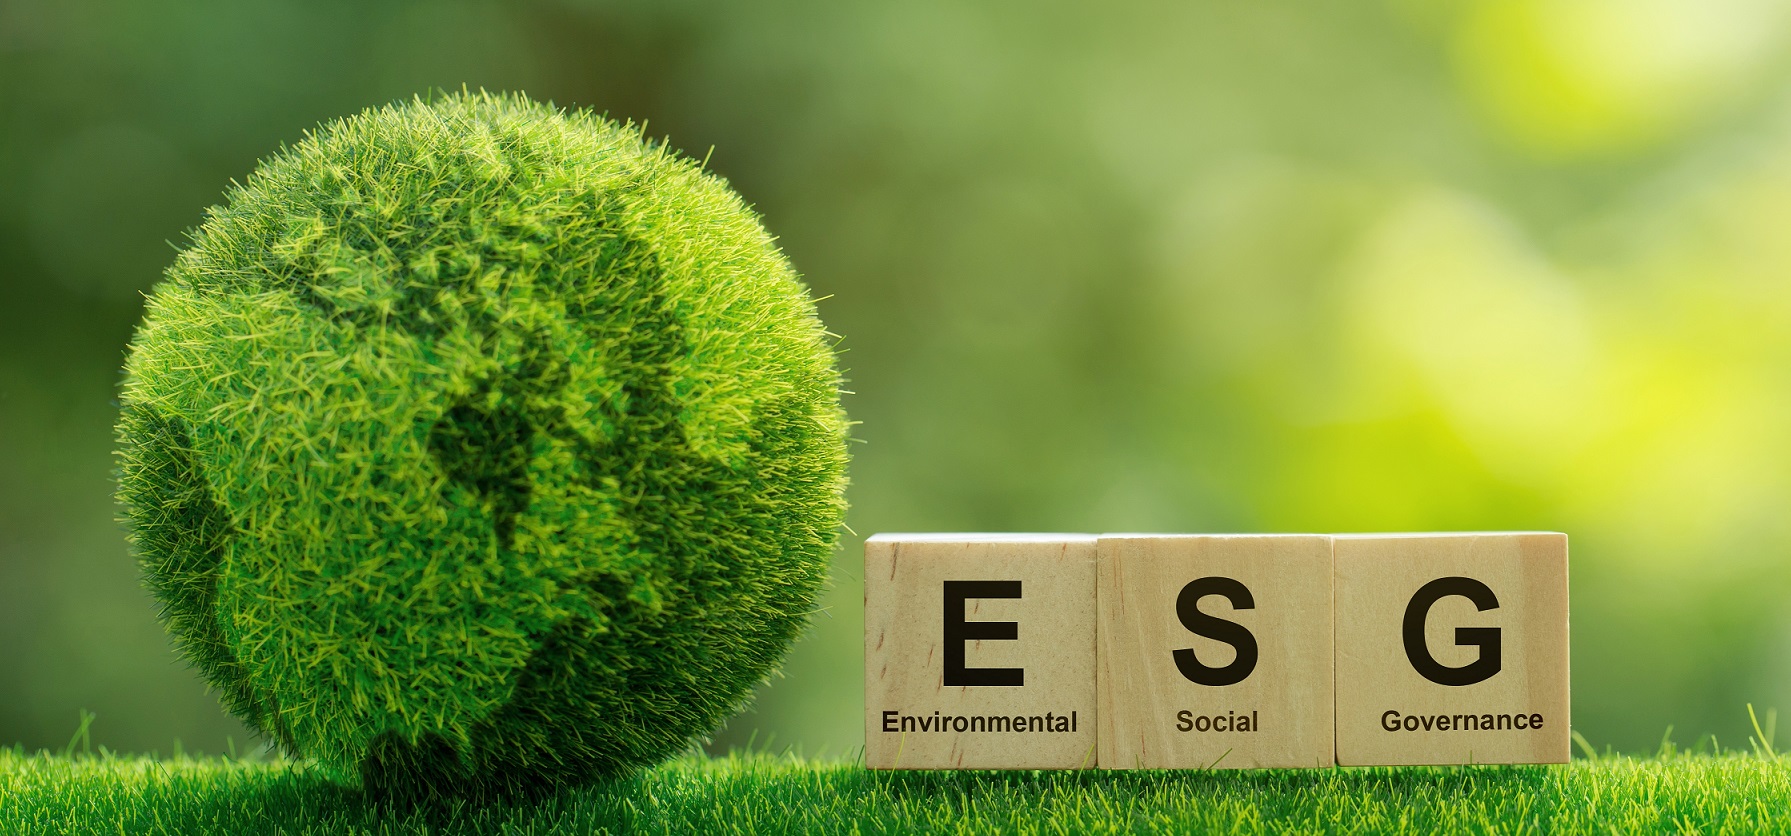 ESG-image-1